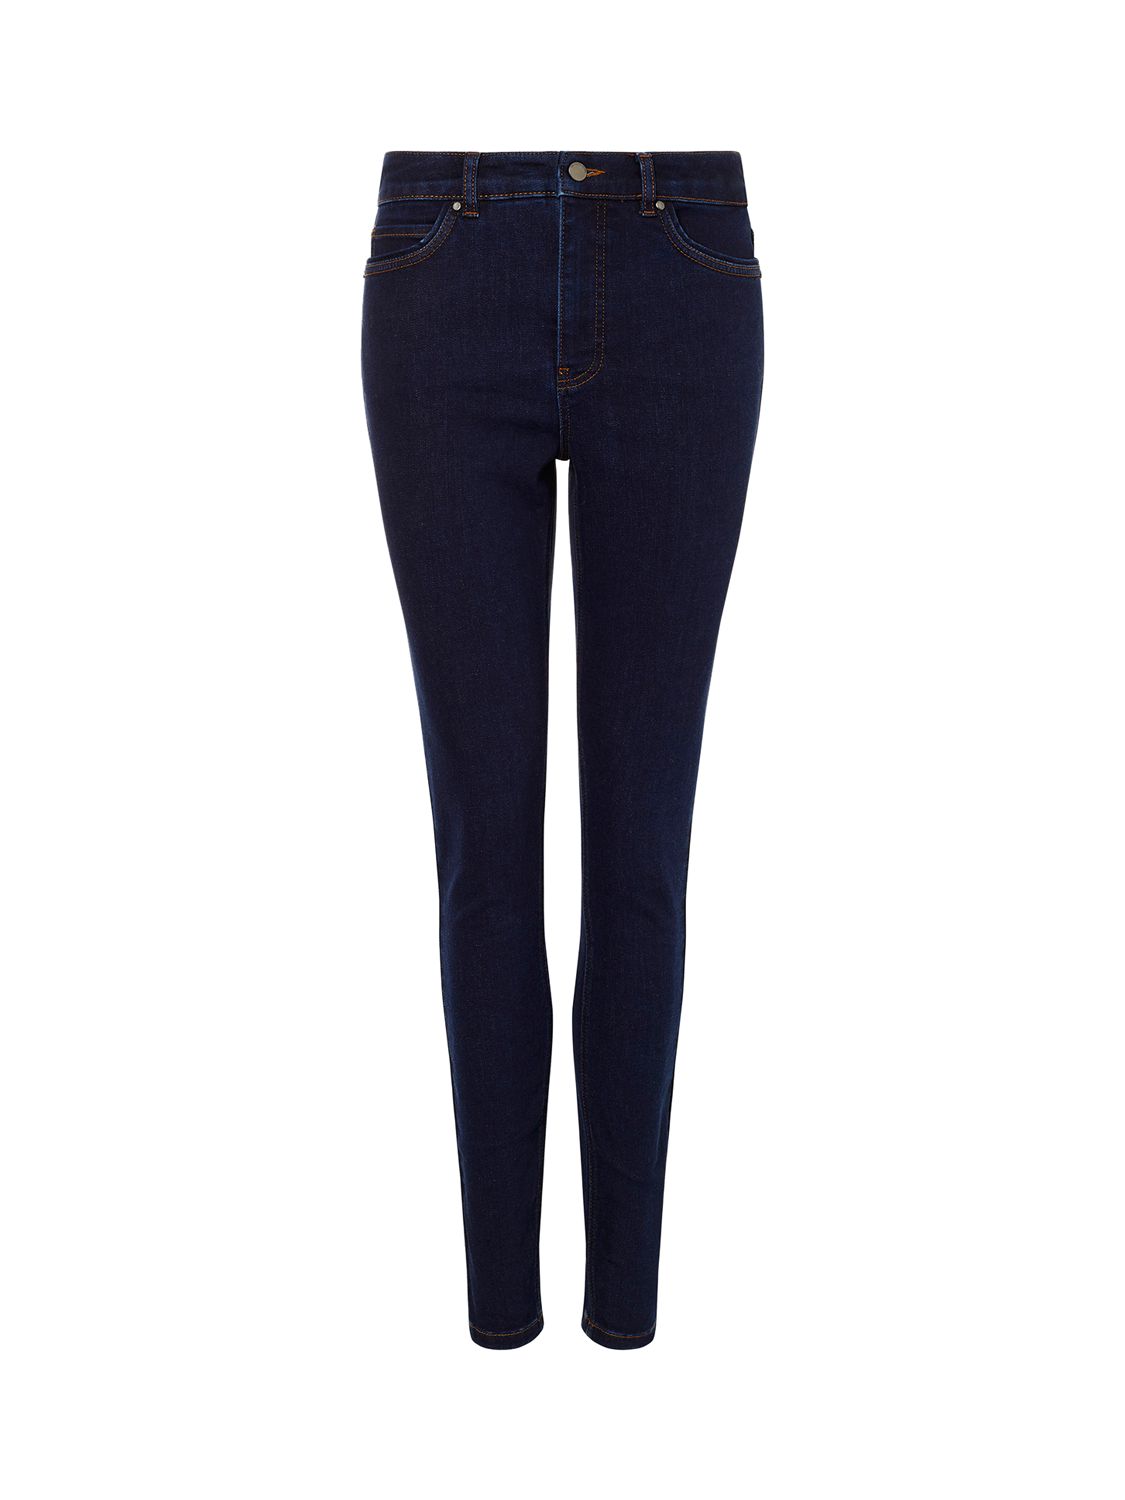 Buy Monsoon Iris Regular Length Skinny Jeans, Blue/Black Online at johnlewis.com